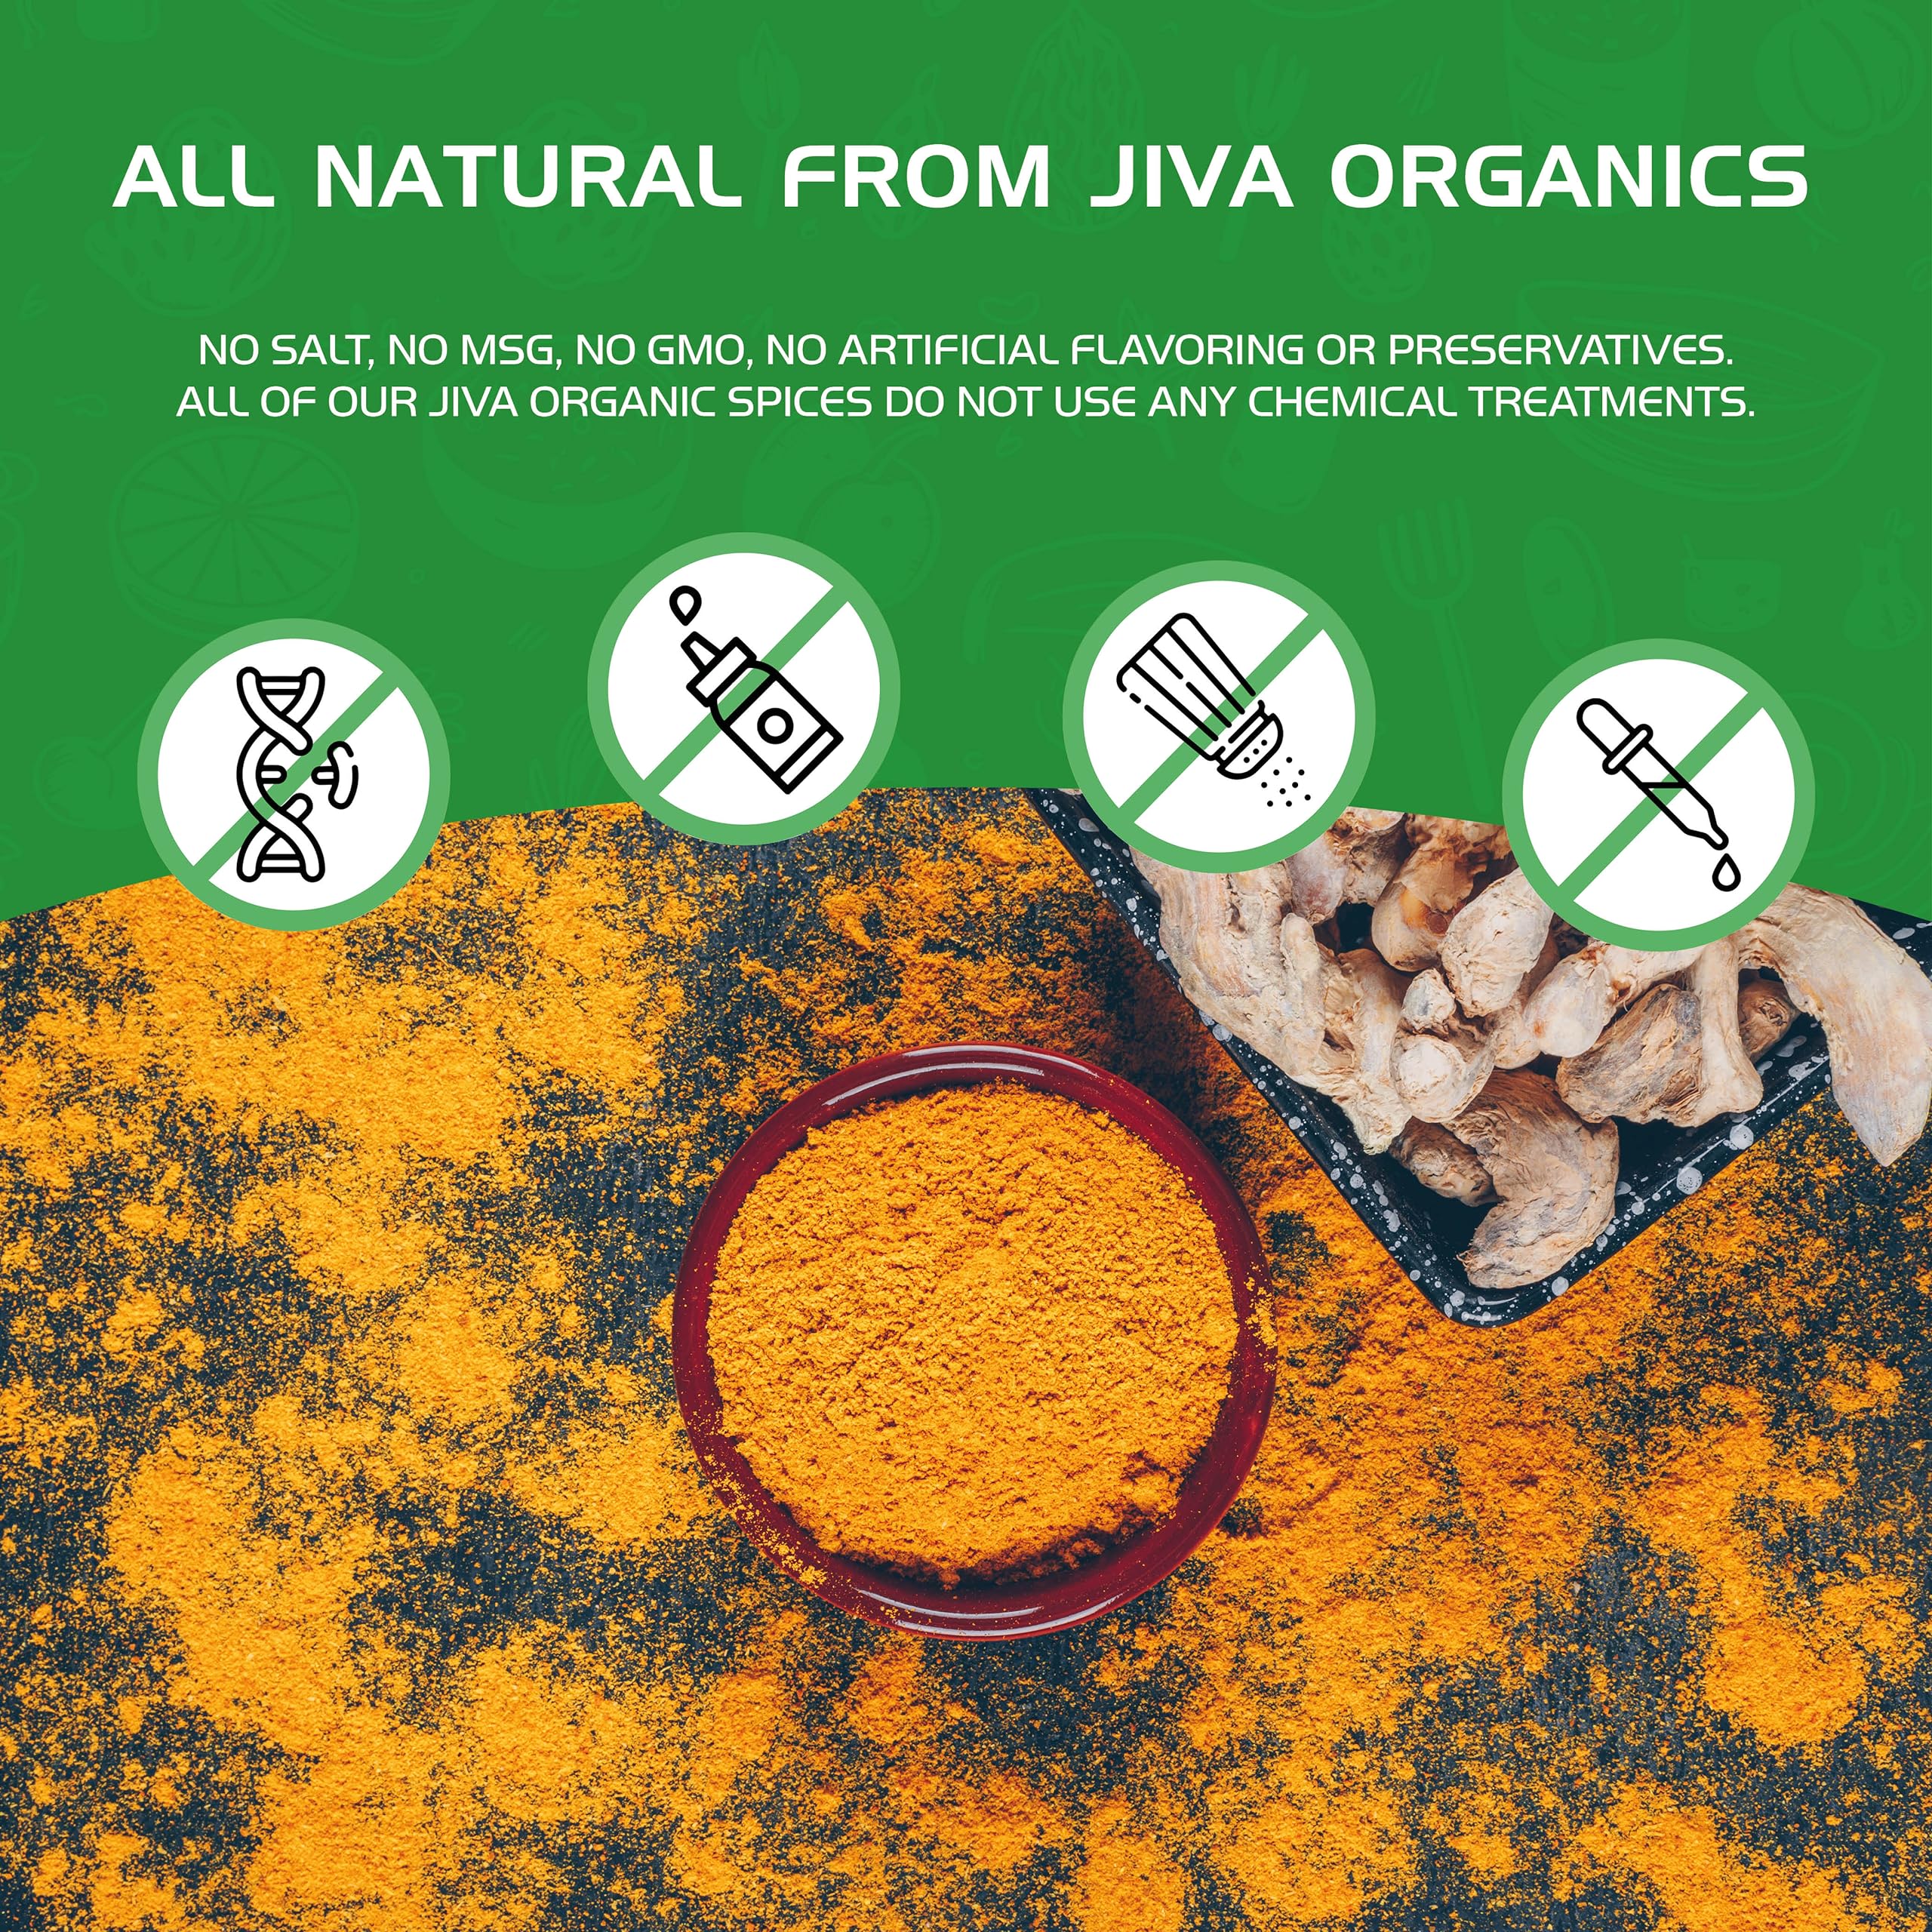 Organic Turmeric Powder 1 Pound Jar by Jiva Organics - 100% Raw with Curcumin - Lab Tested & Reports Available - Raw from India